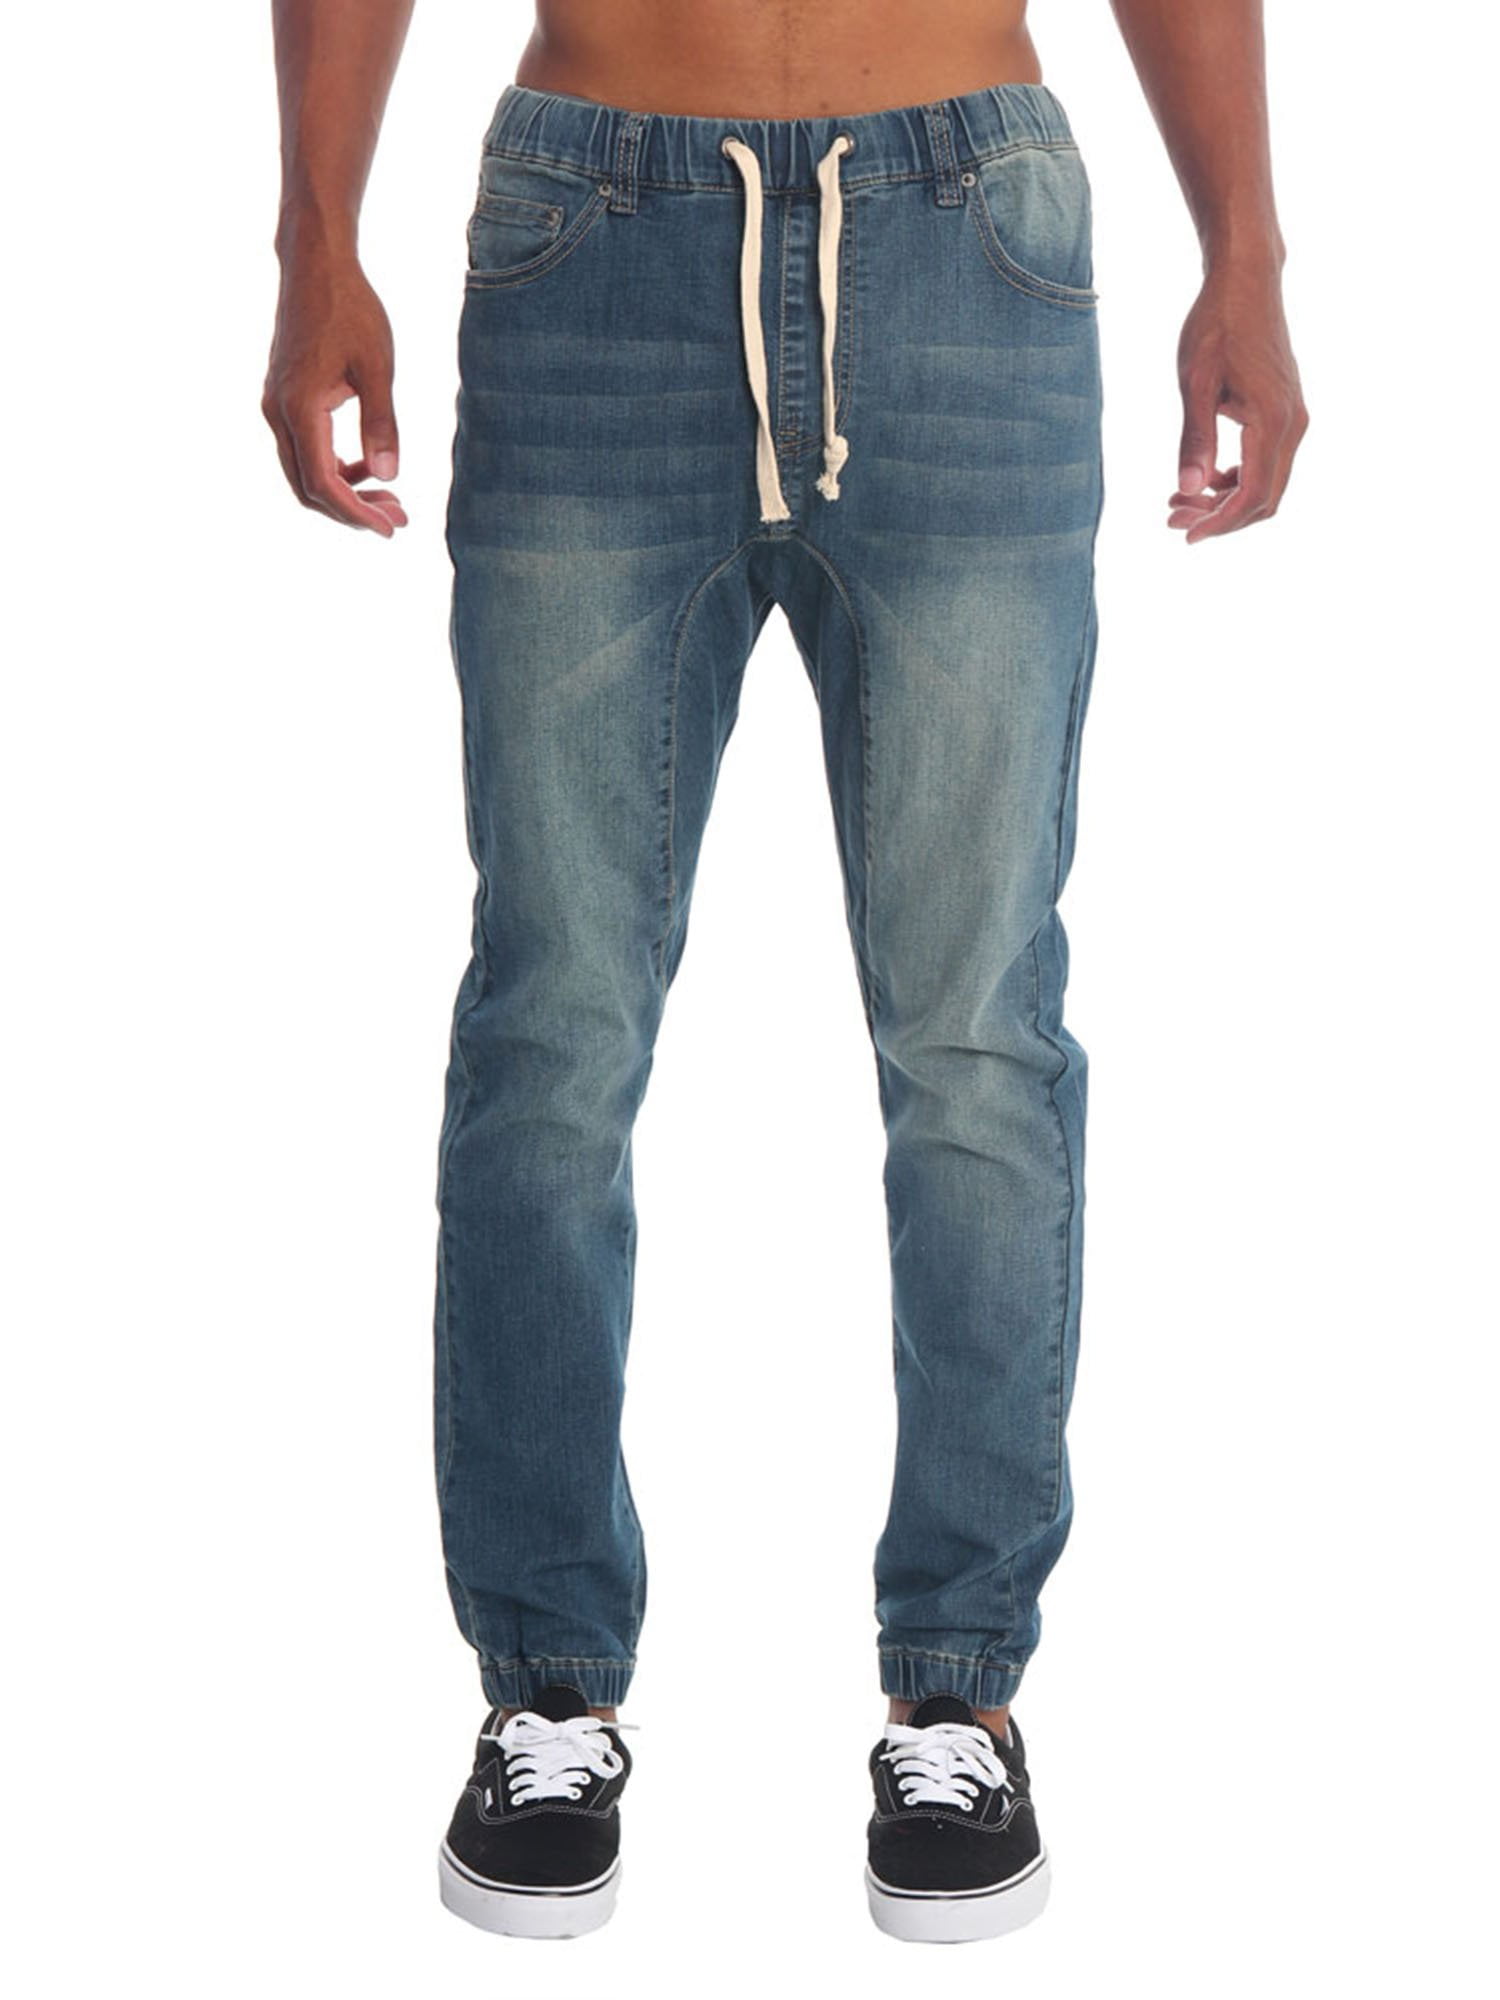 Medium Blue Drop Crotch Jogger pants Made in USA with drawstring twill denim 